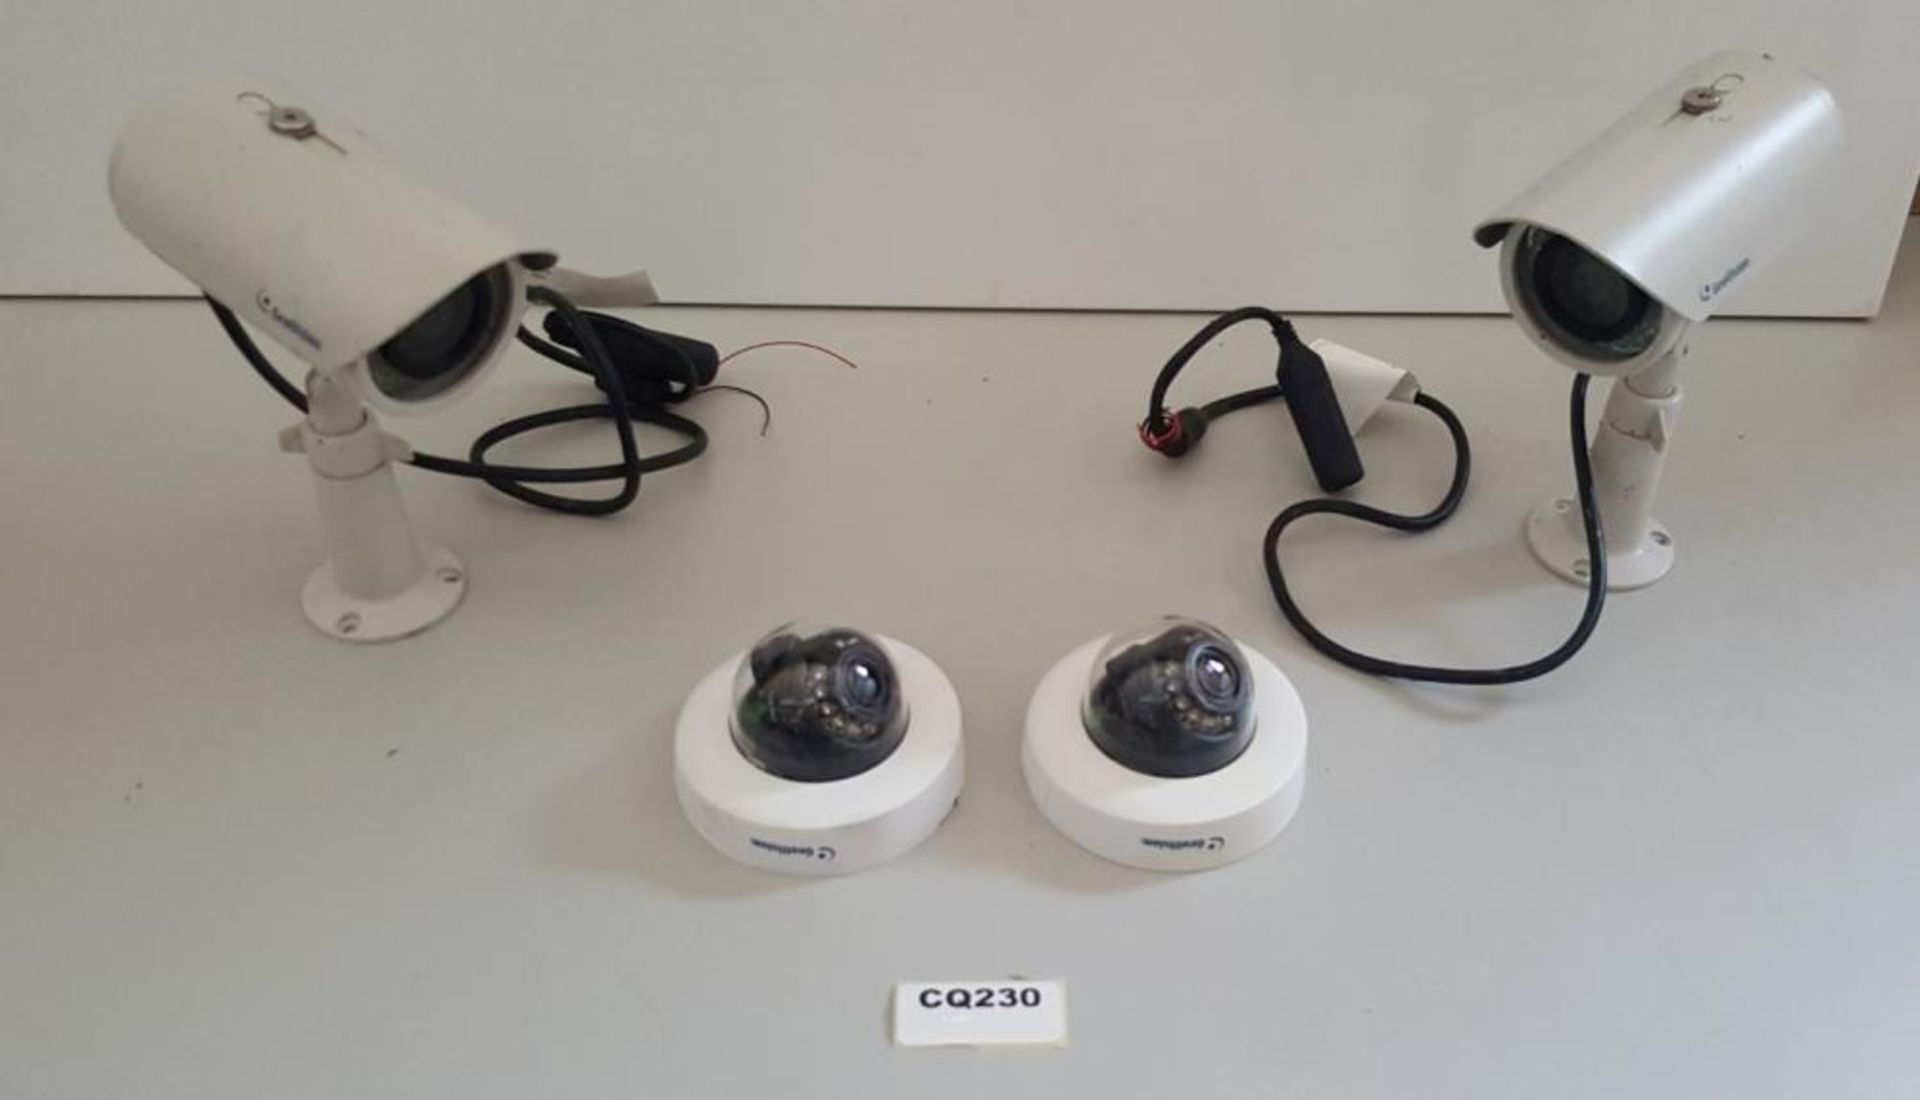 4 x Geovision Security Cameras (2 x GV-EFD1100, 2 x GV-EBL1100) - Ref CQ230/K2 - CL379 - Location: A - Image 2 of 10